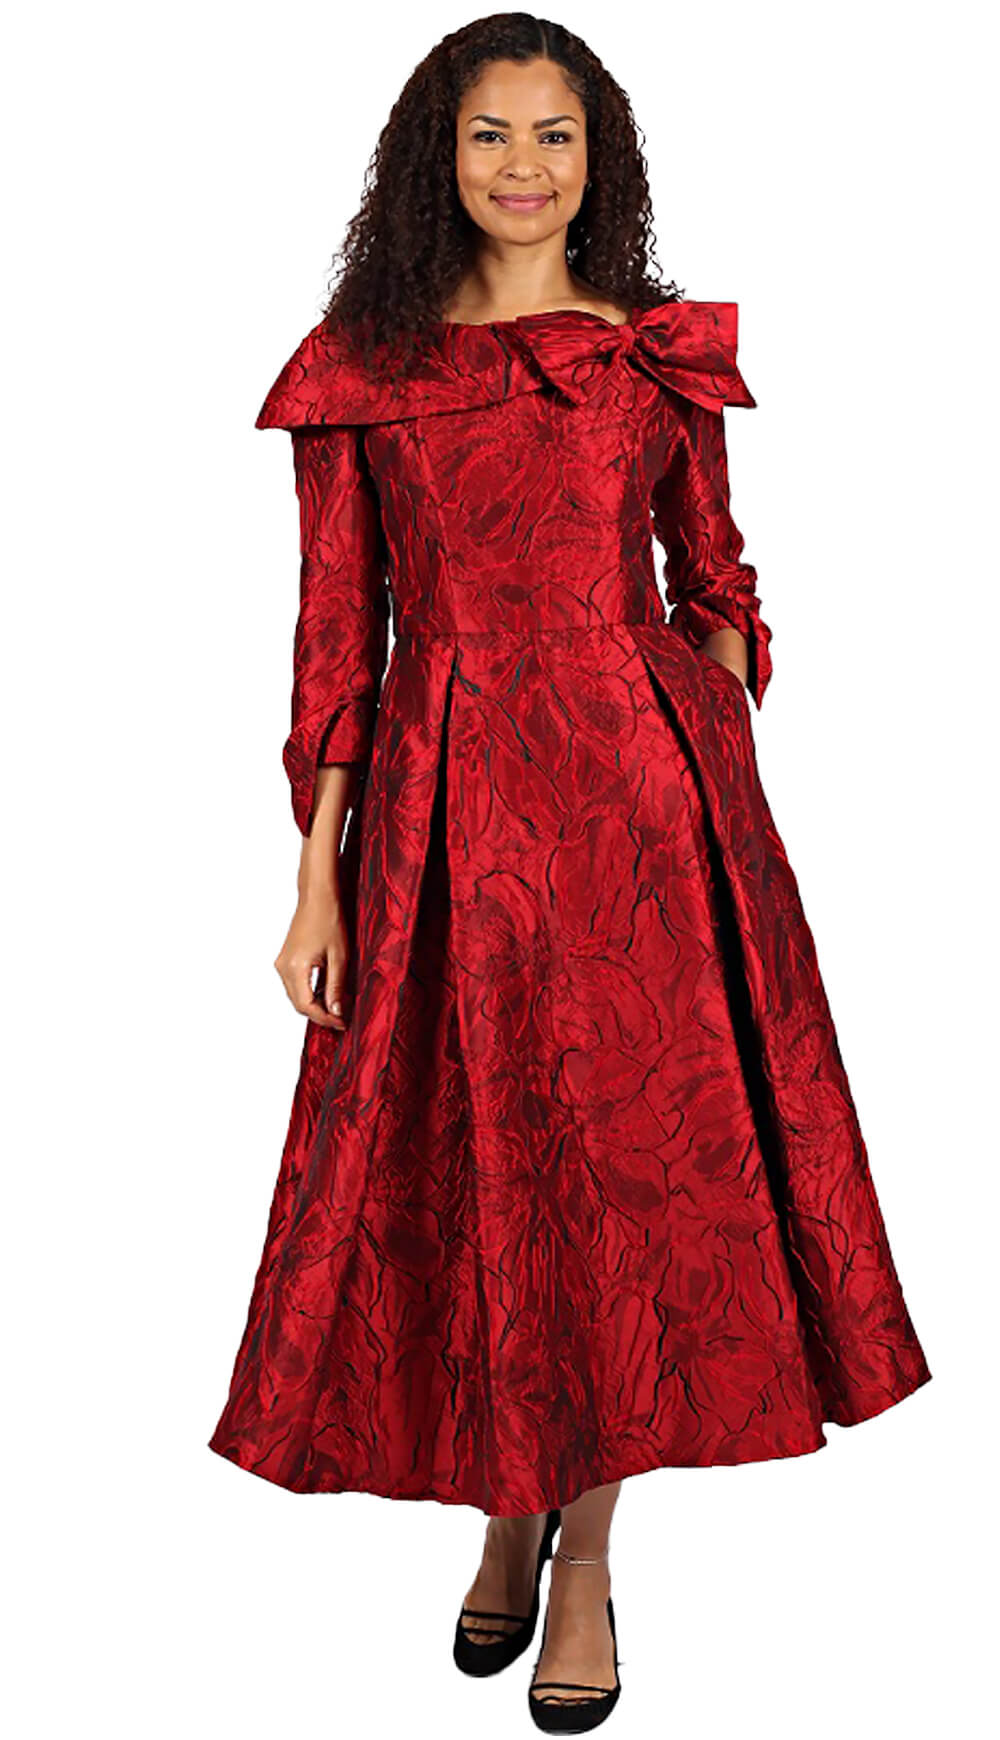 Diana 1 piece Brocade Dress 8757 Size 8-20